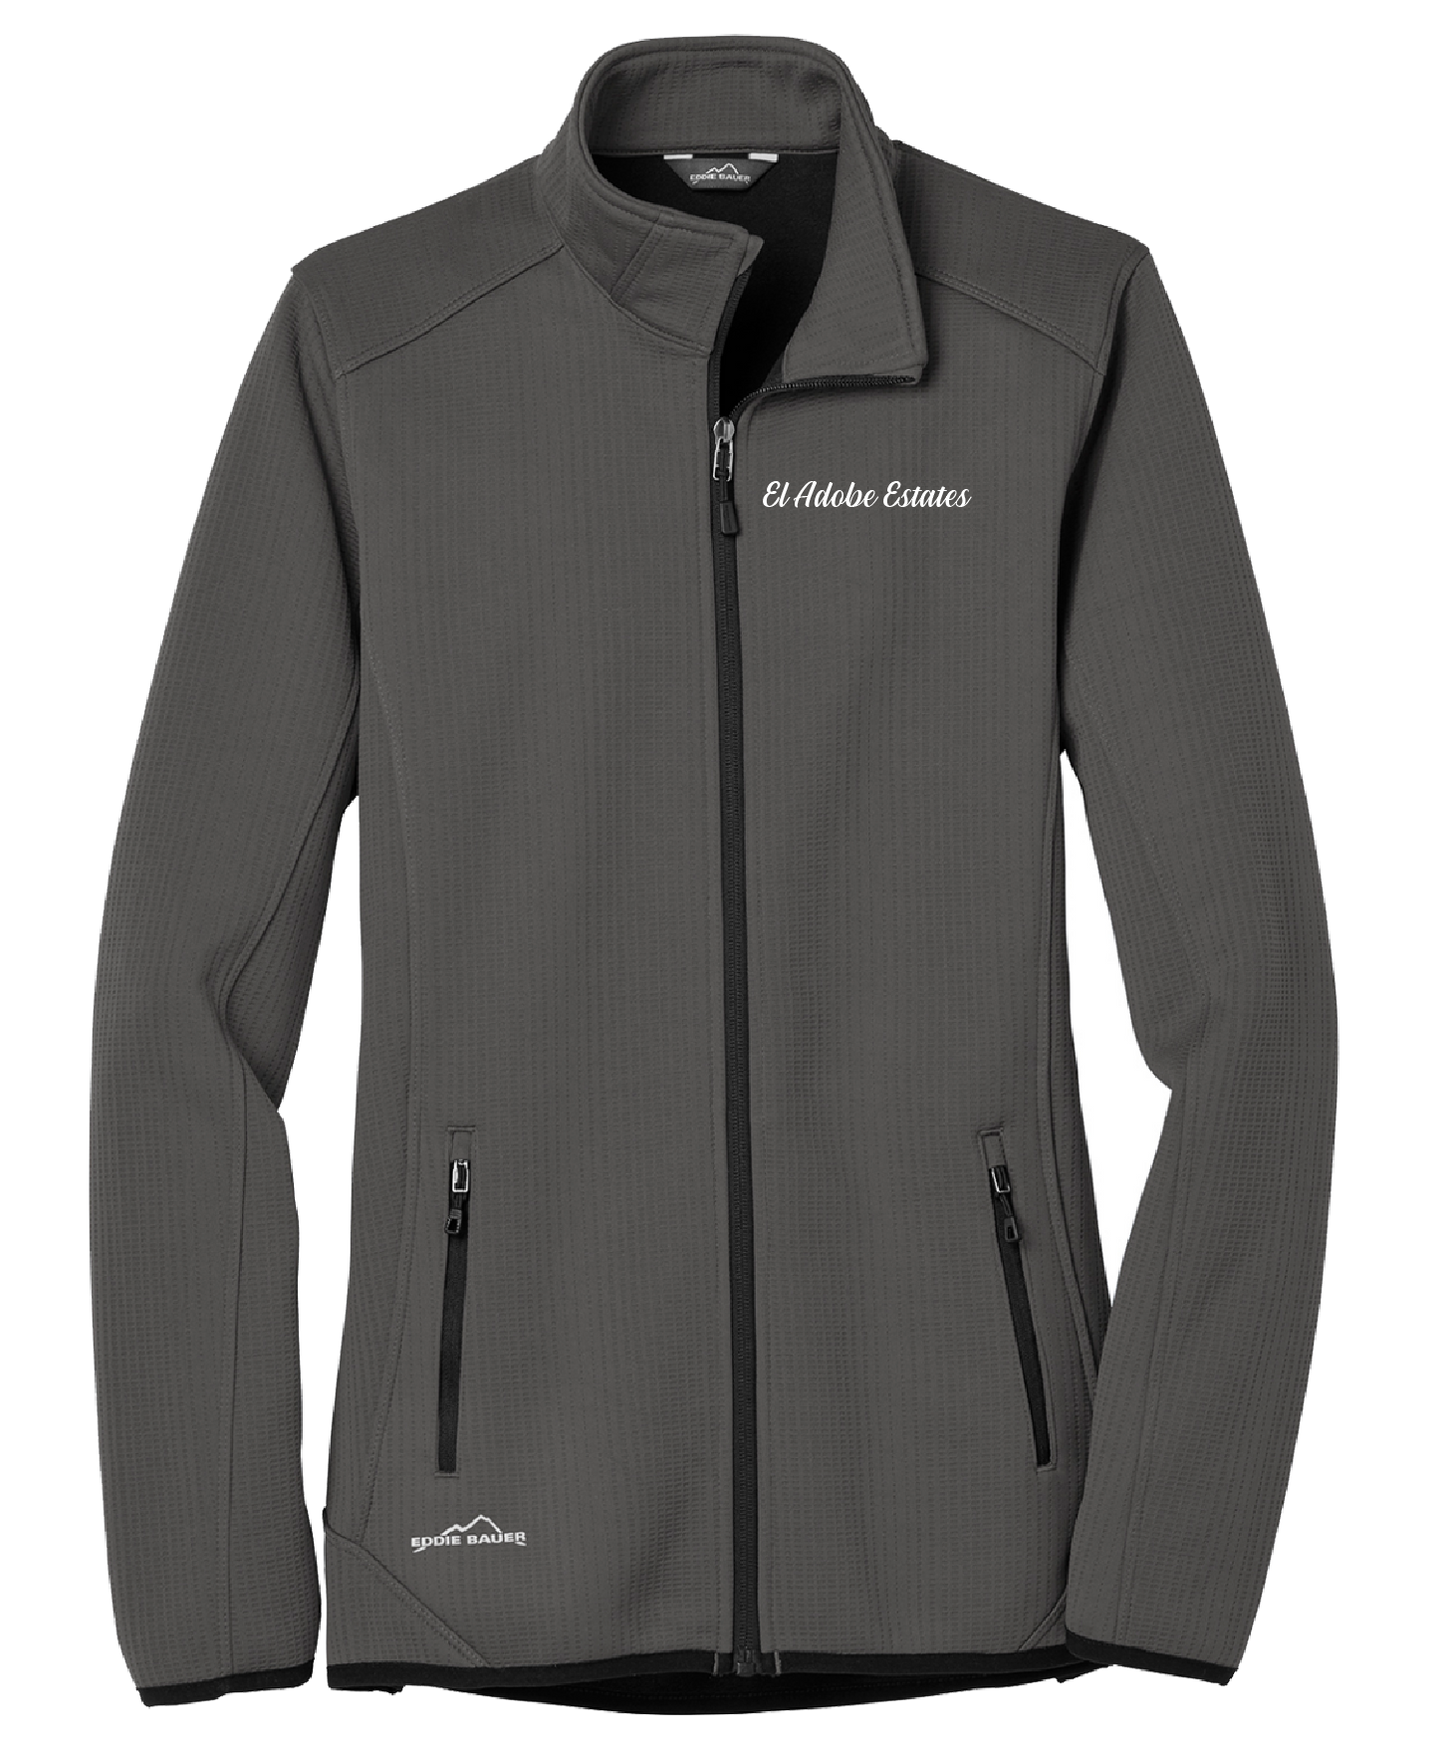 El Adobe Estates - Ladies - Eddie Bauer ® Dash Full-Zip Fleece Jacket